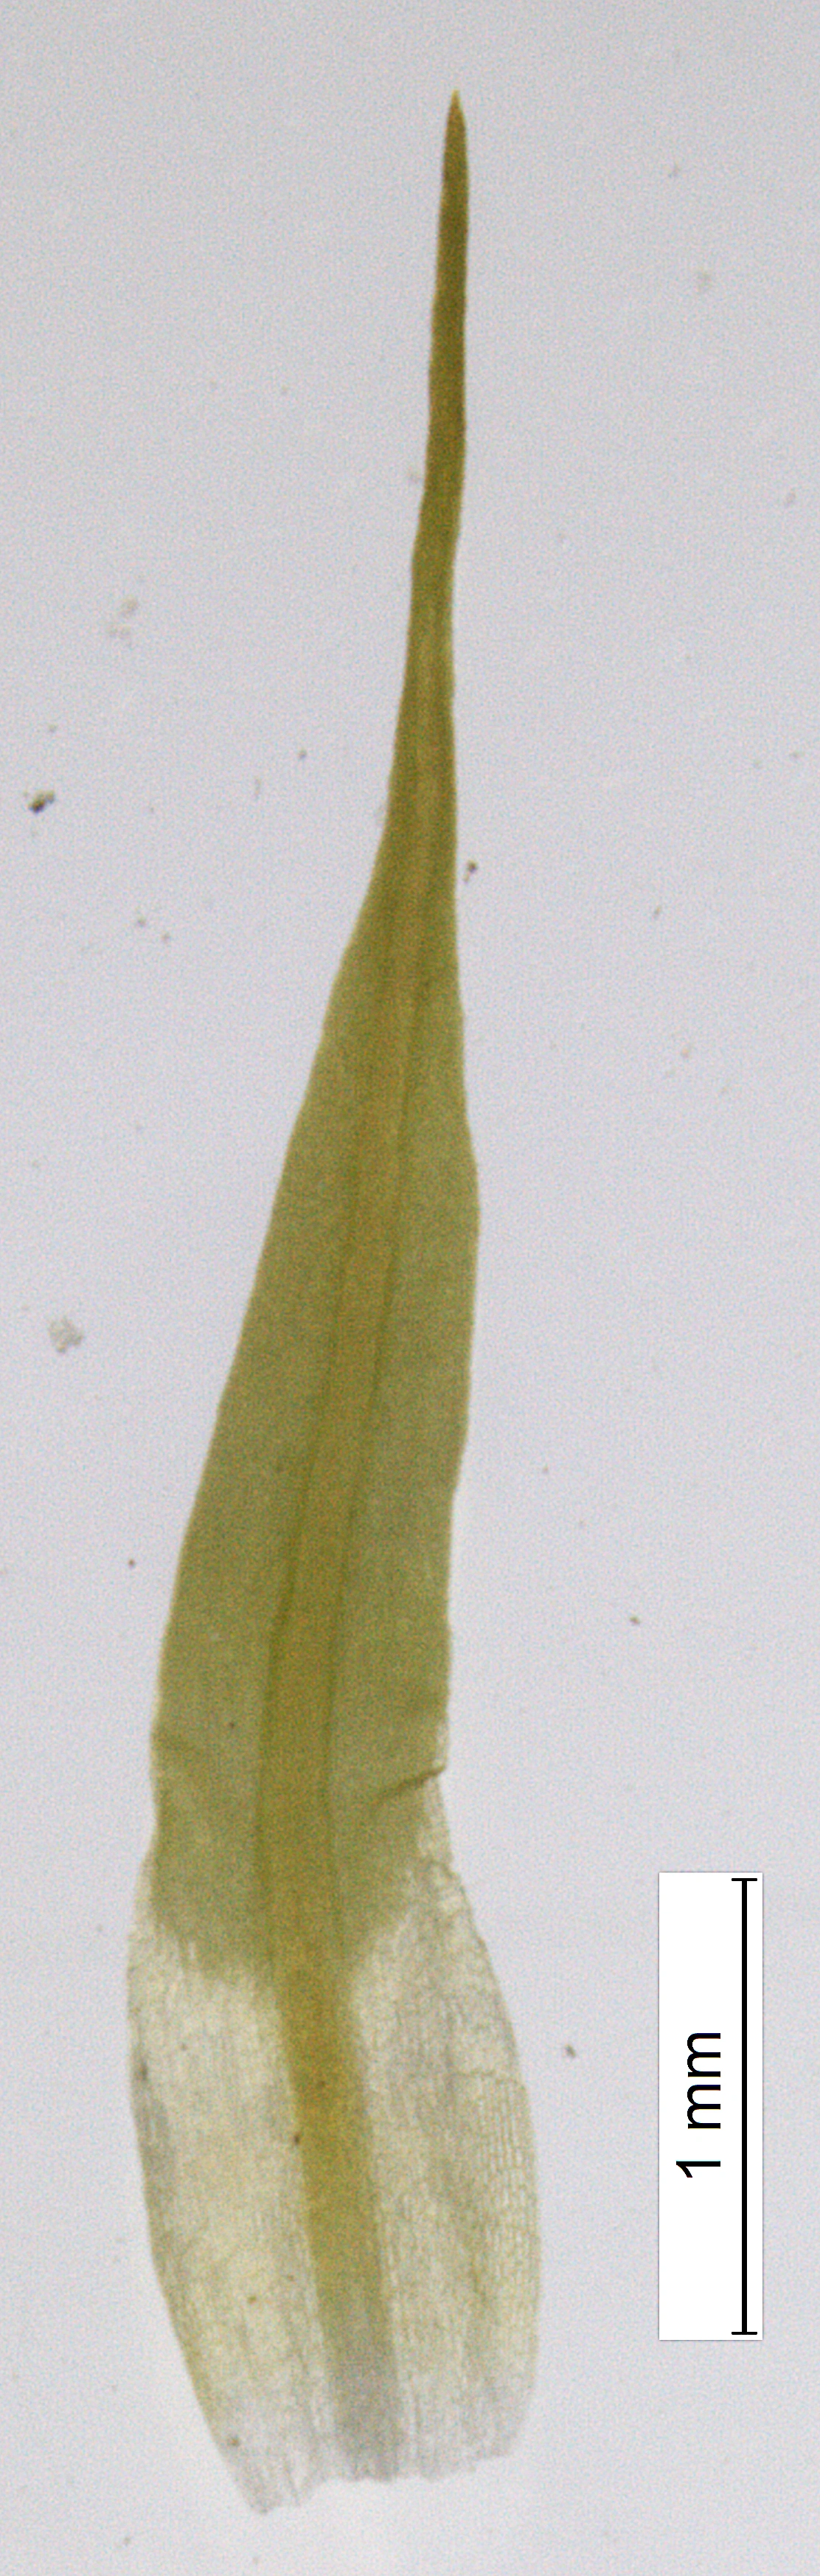 Putevrimose: Tortella tortuosa fragilifolia.